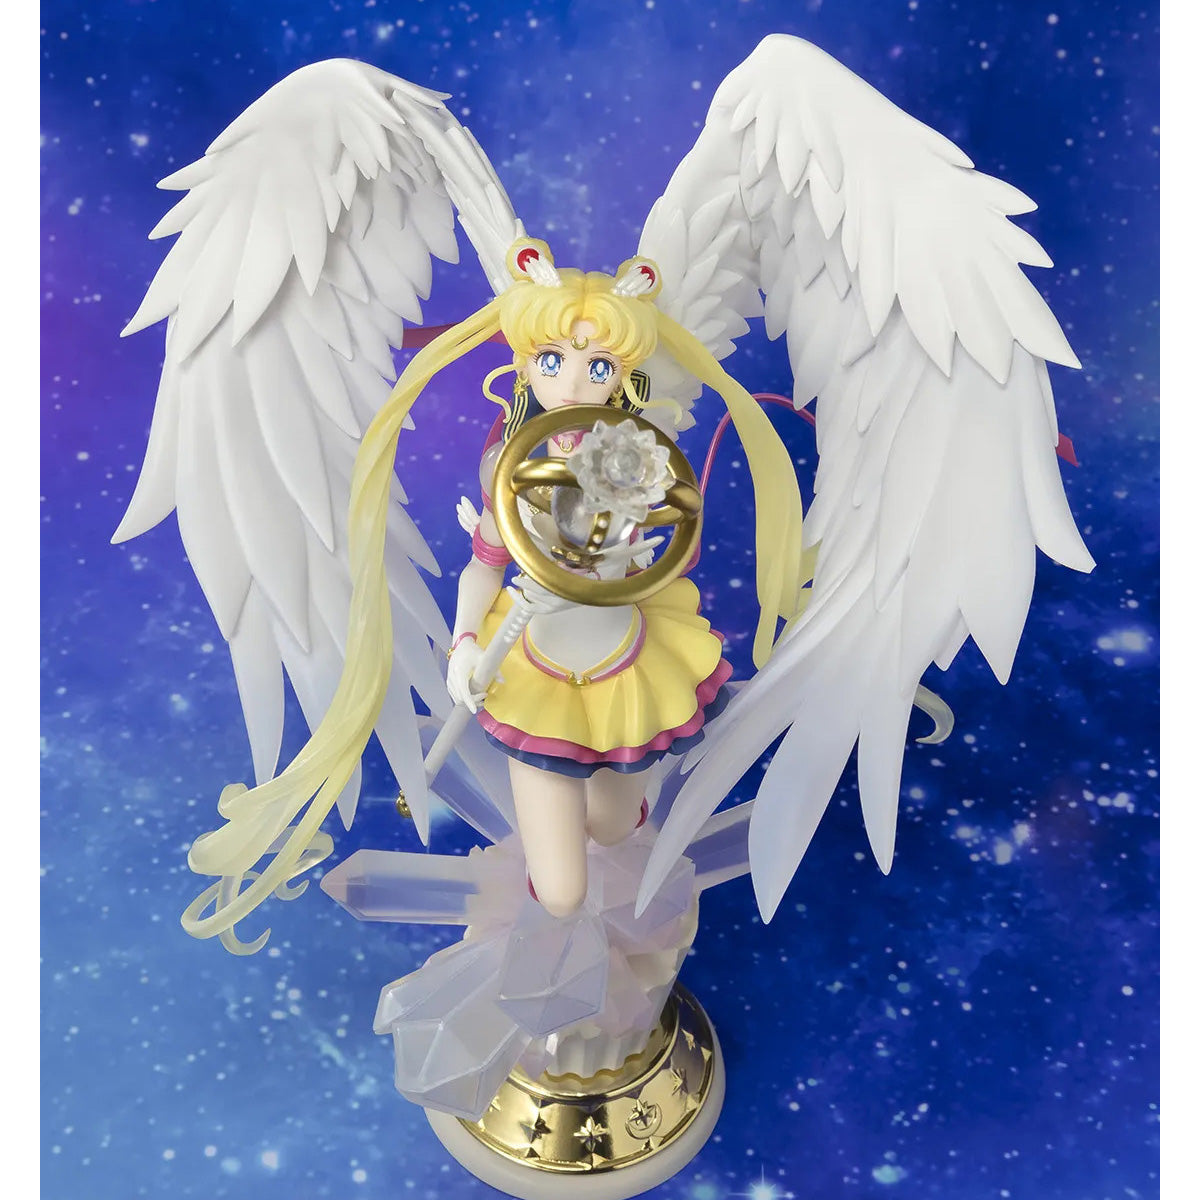 Bandai - figuartsZERO - Sailor Moon Eternal - chouette Eternal Sailor Moon (Darkness Calls to Light, and Light, Summons Darkness)